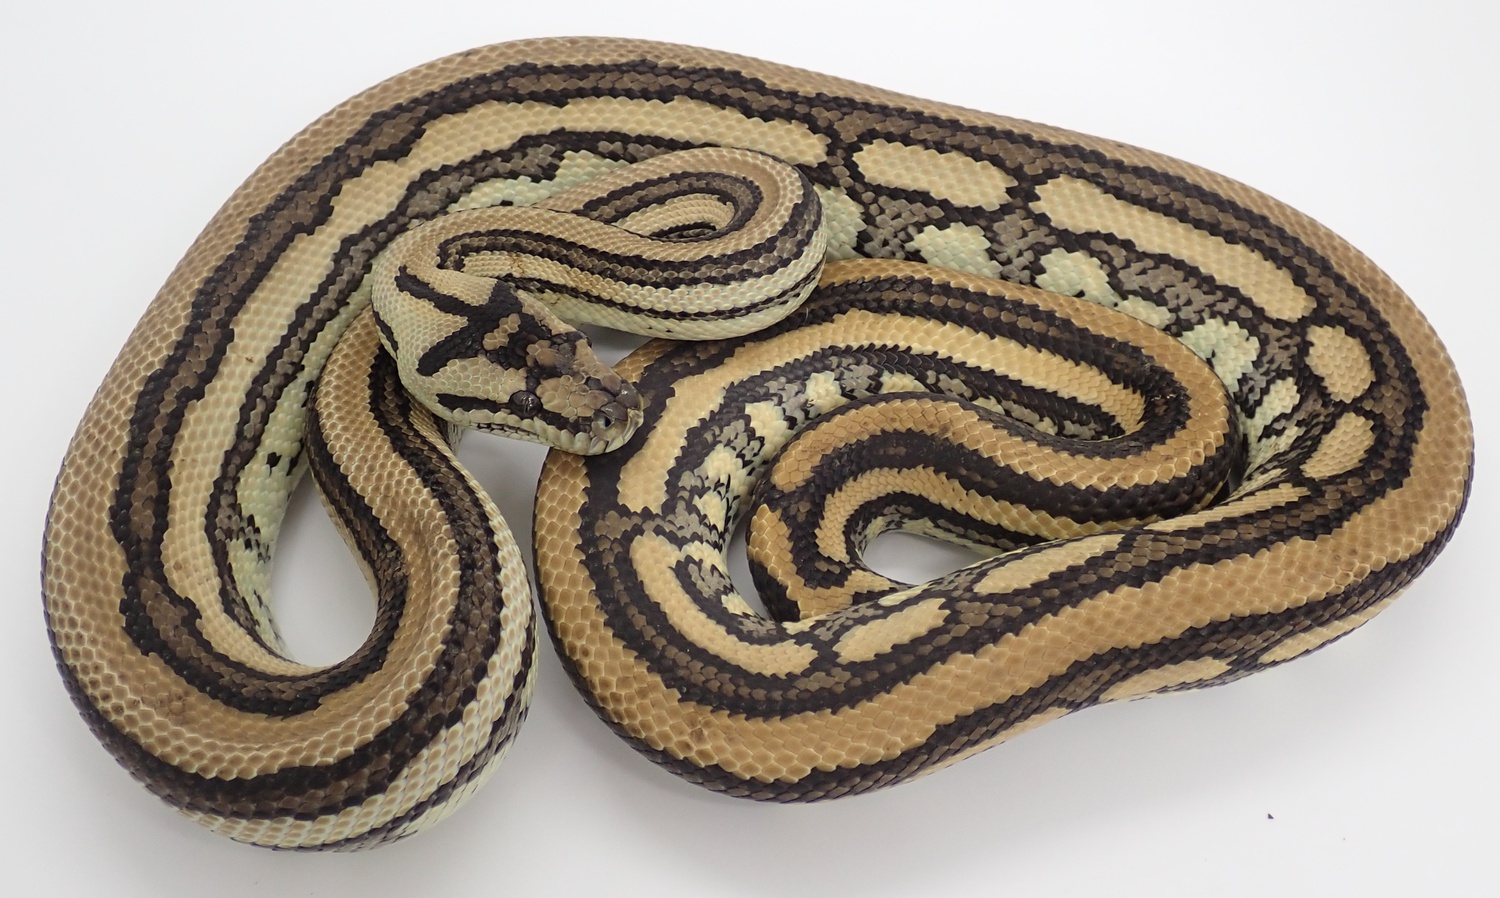 Baylin Red Tiger Male Coastal Carpet Python by KD Selective Creations